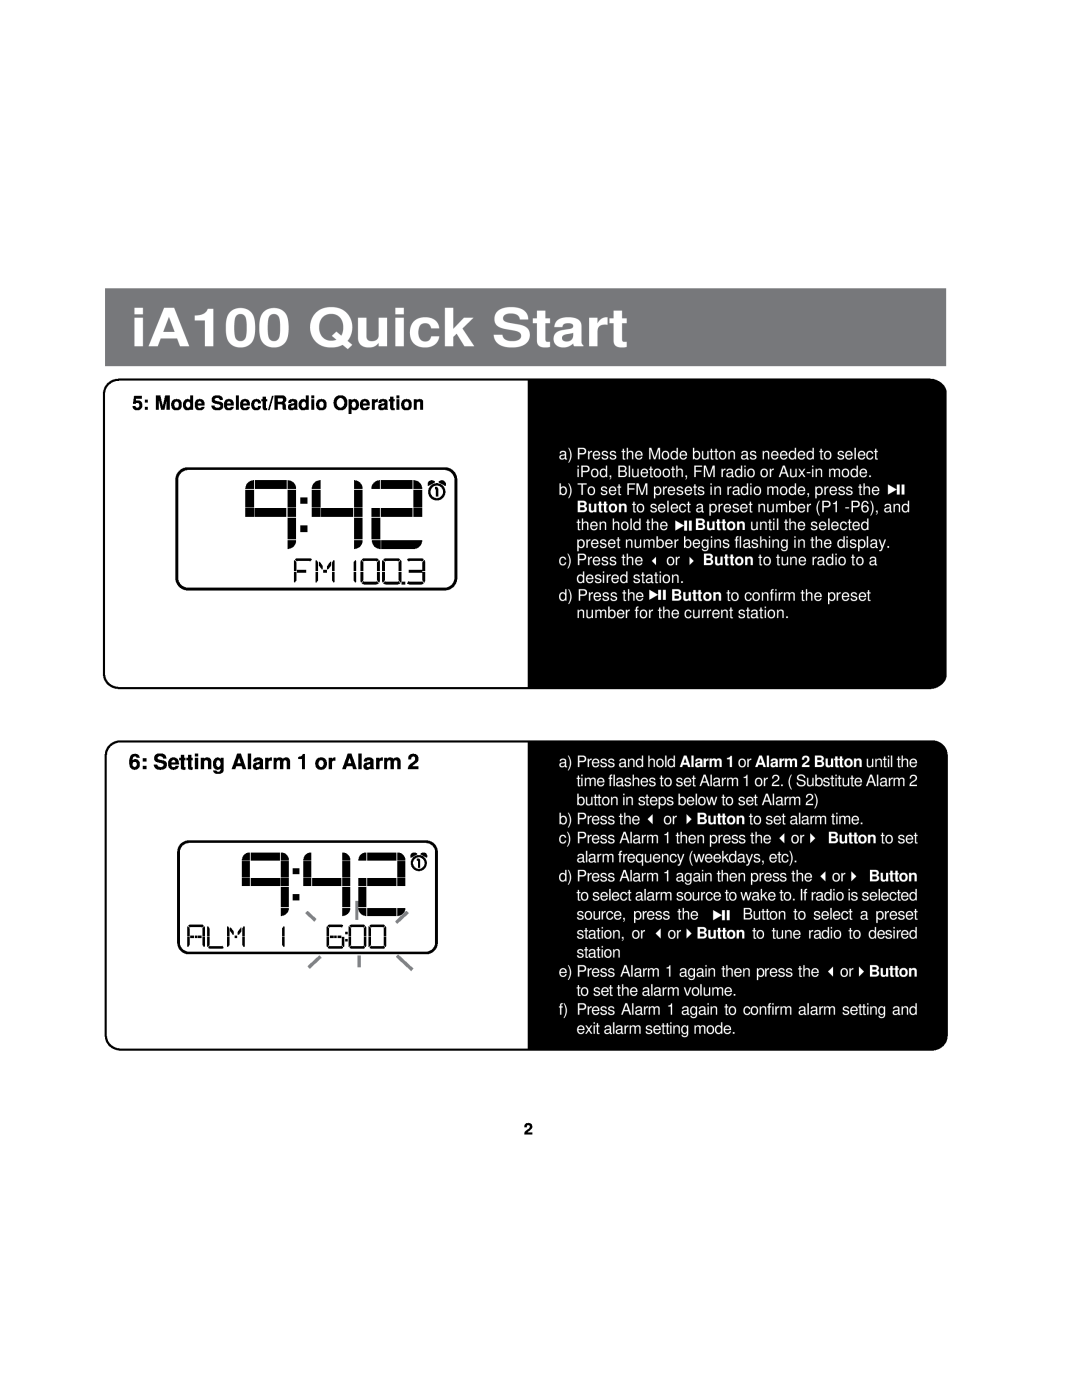 iHome manual Mode Select/Radio Operation, iA100 Quick Start, Setting Alarm 1 or Alarm, or Button 